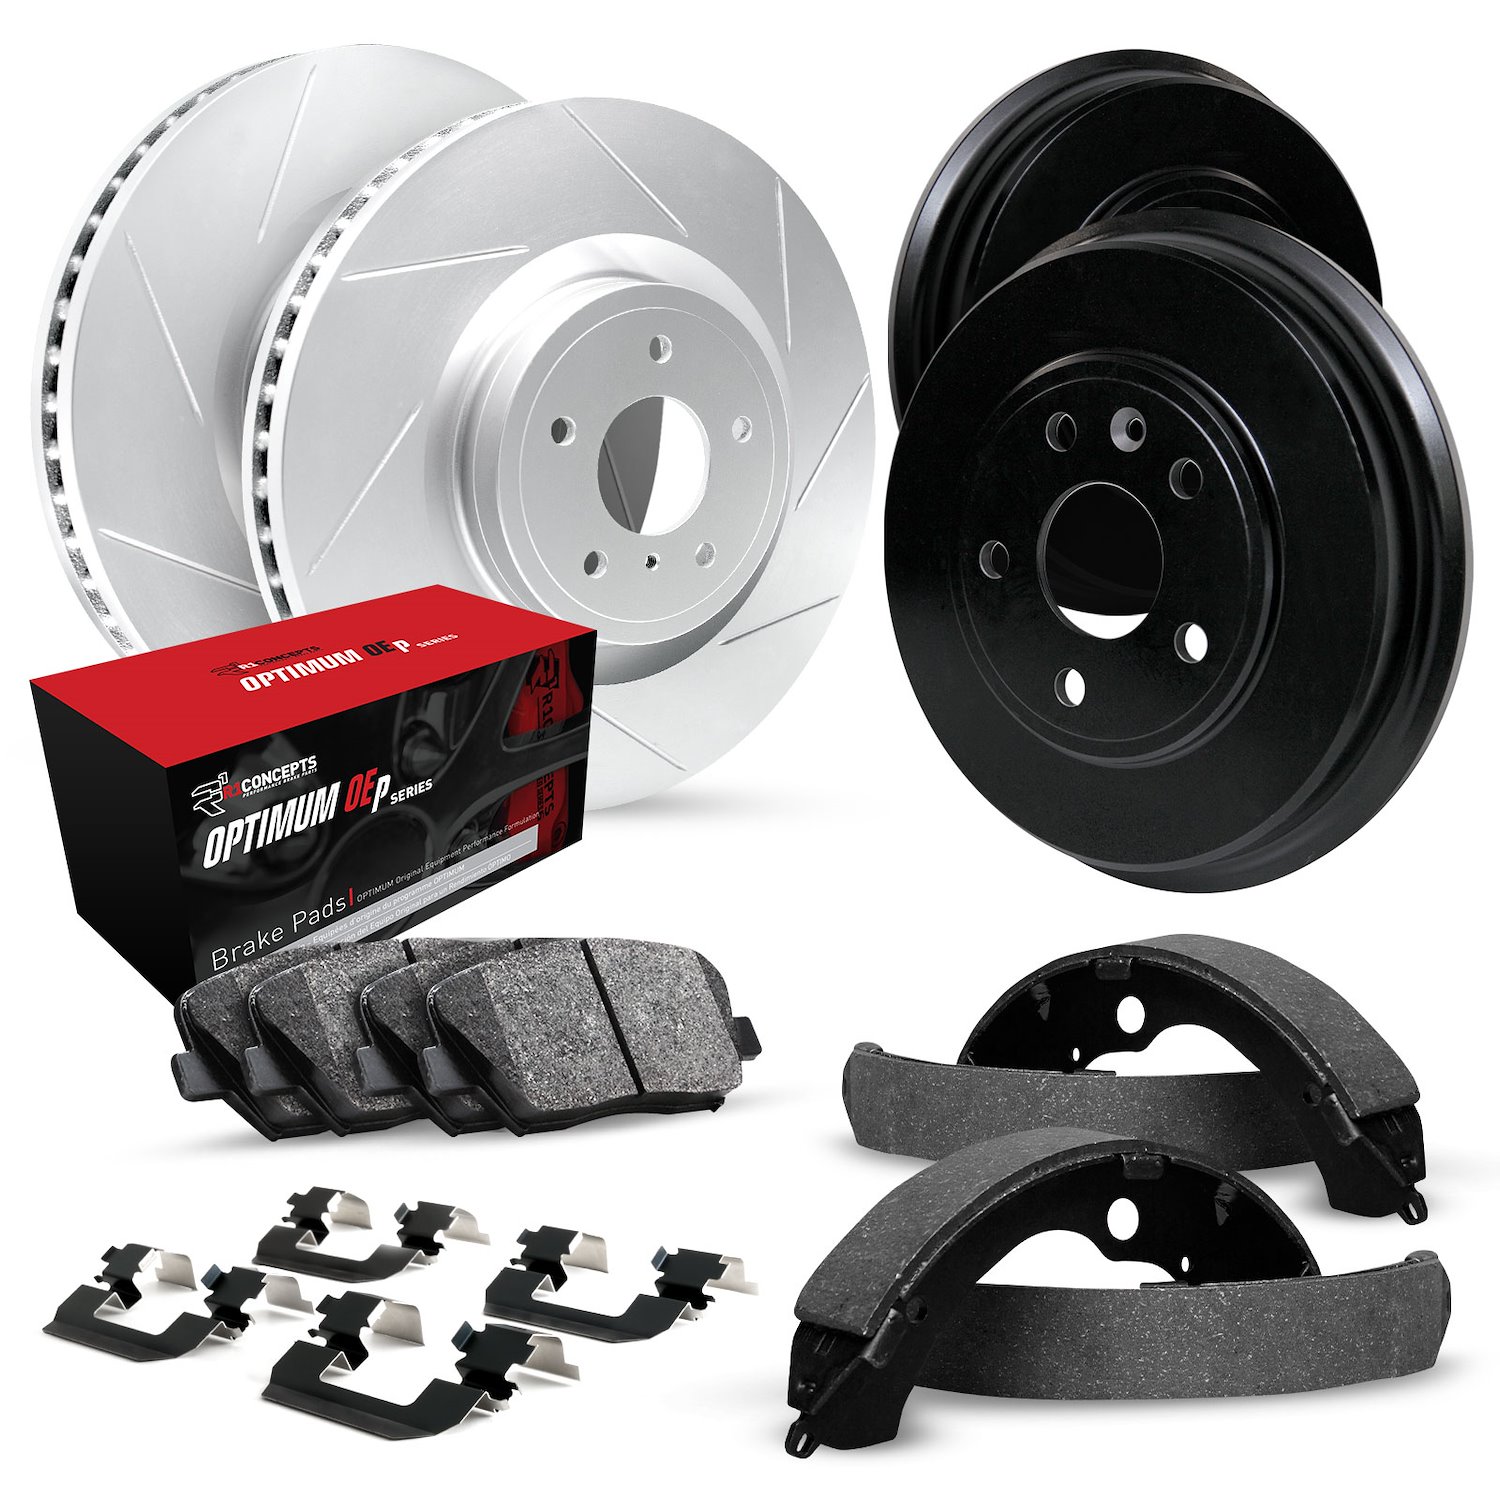 GEO-Carbon Slotted Brake Rotor & Drum Set w/Optimum OE Pads, Shoes, & Hardware, 2006-2014 Lexus/Toyota/Scion